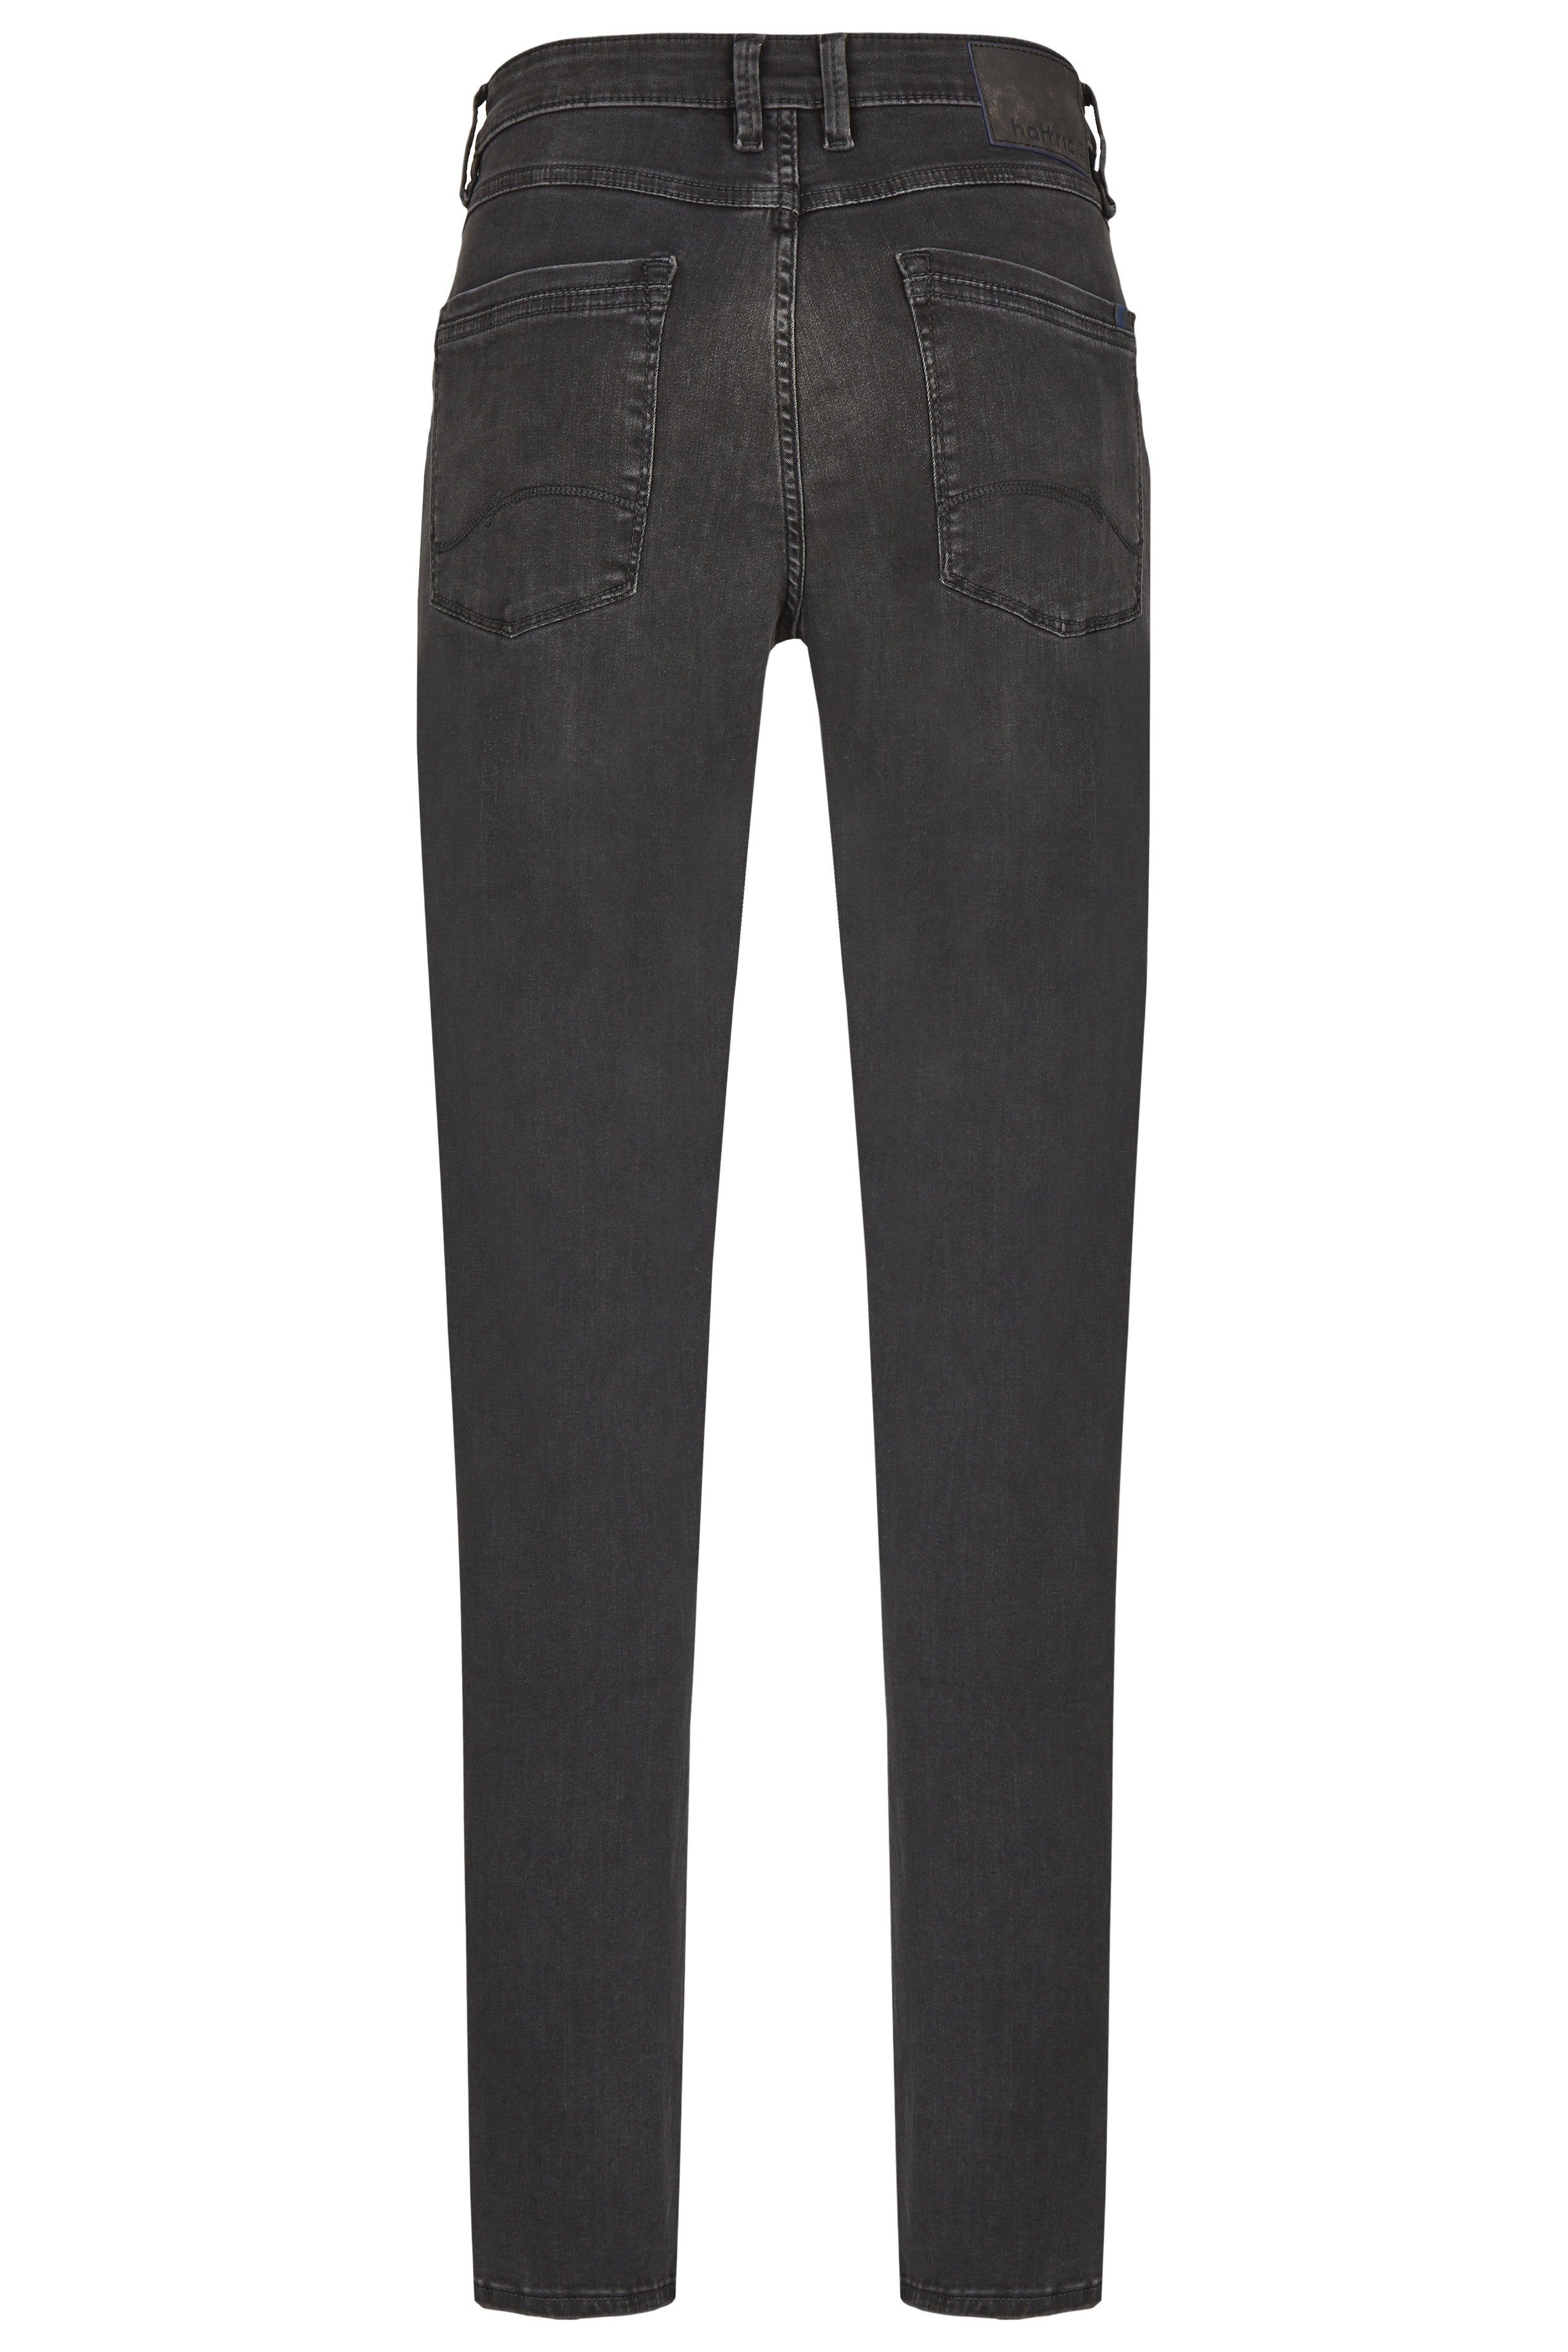 9Y51.07 dark 688985 5-Pocket-Jeans out HATTRIC HUNTER anthra grey washed Hattric